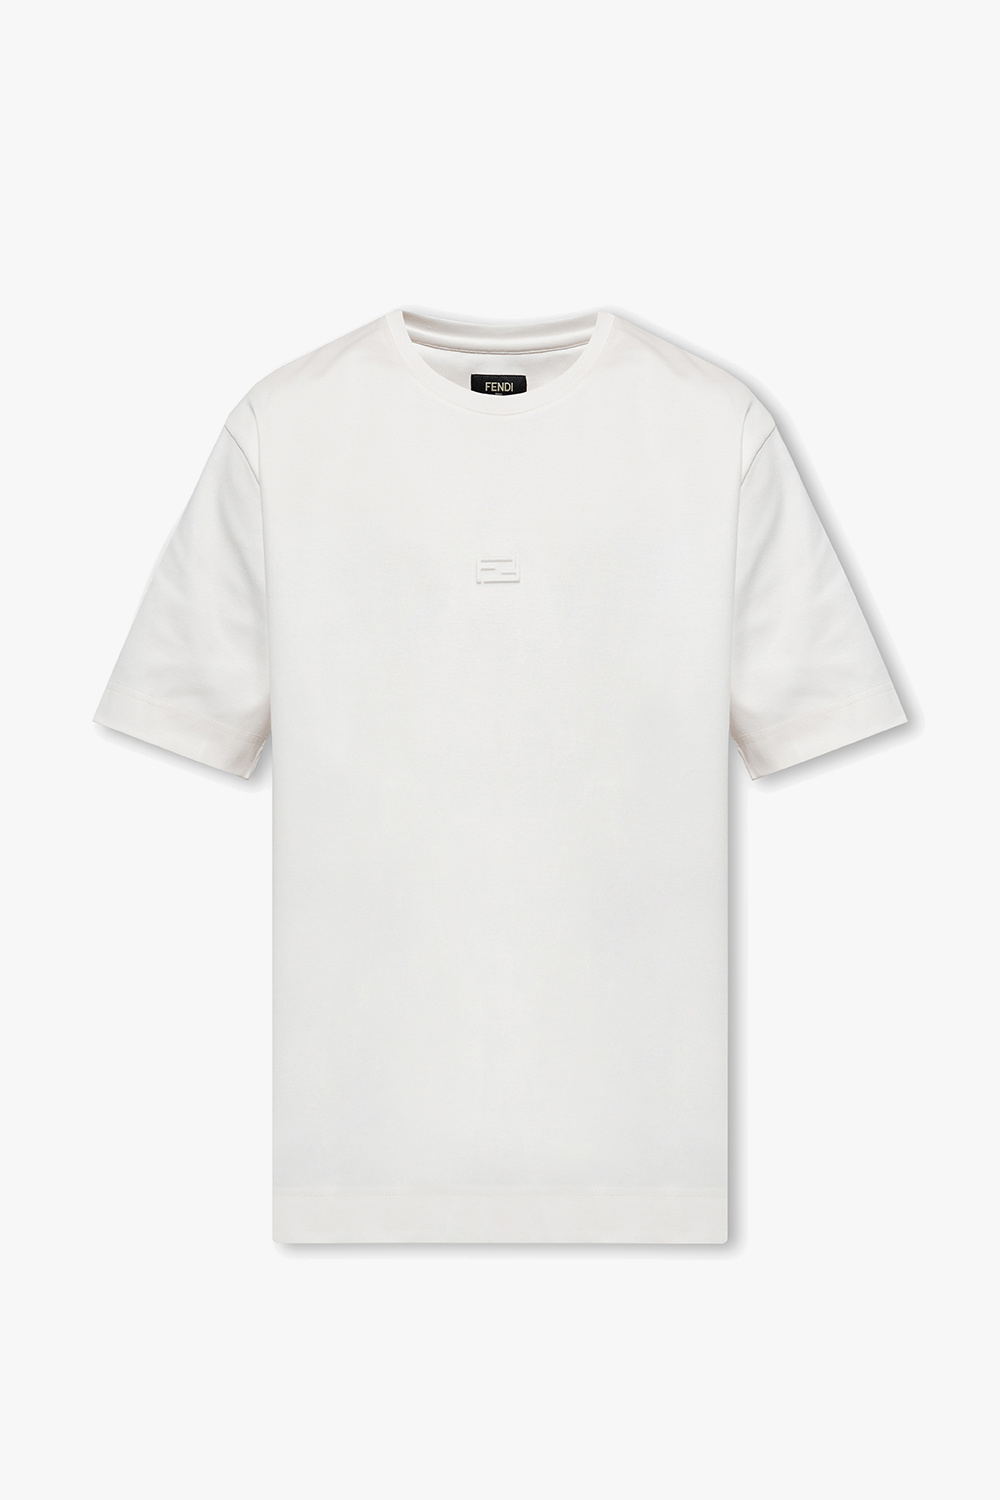 White T-shirt with logo Fendi - Vitkac KR